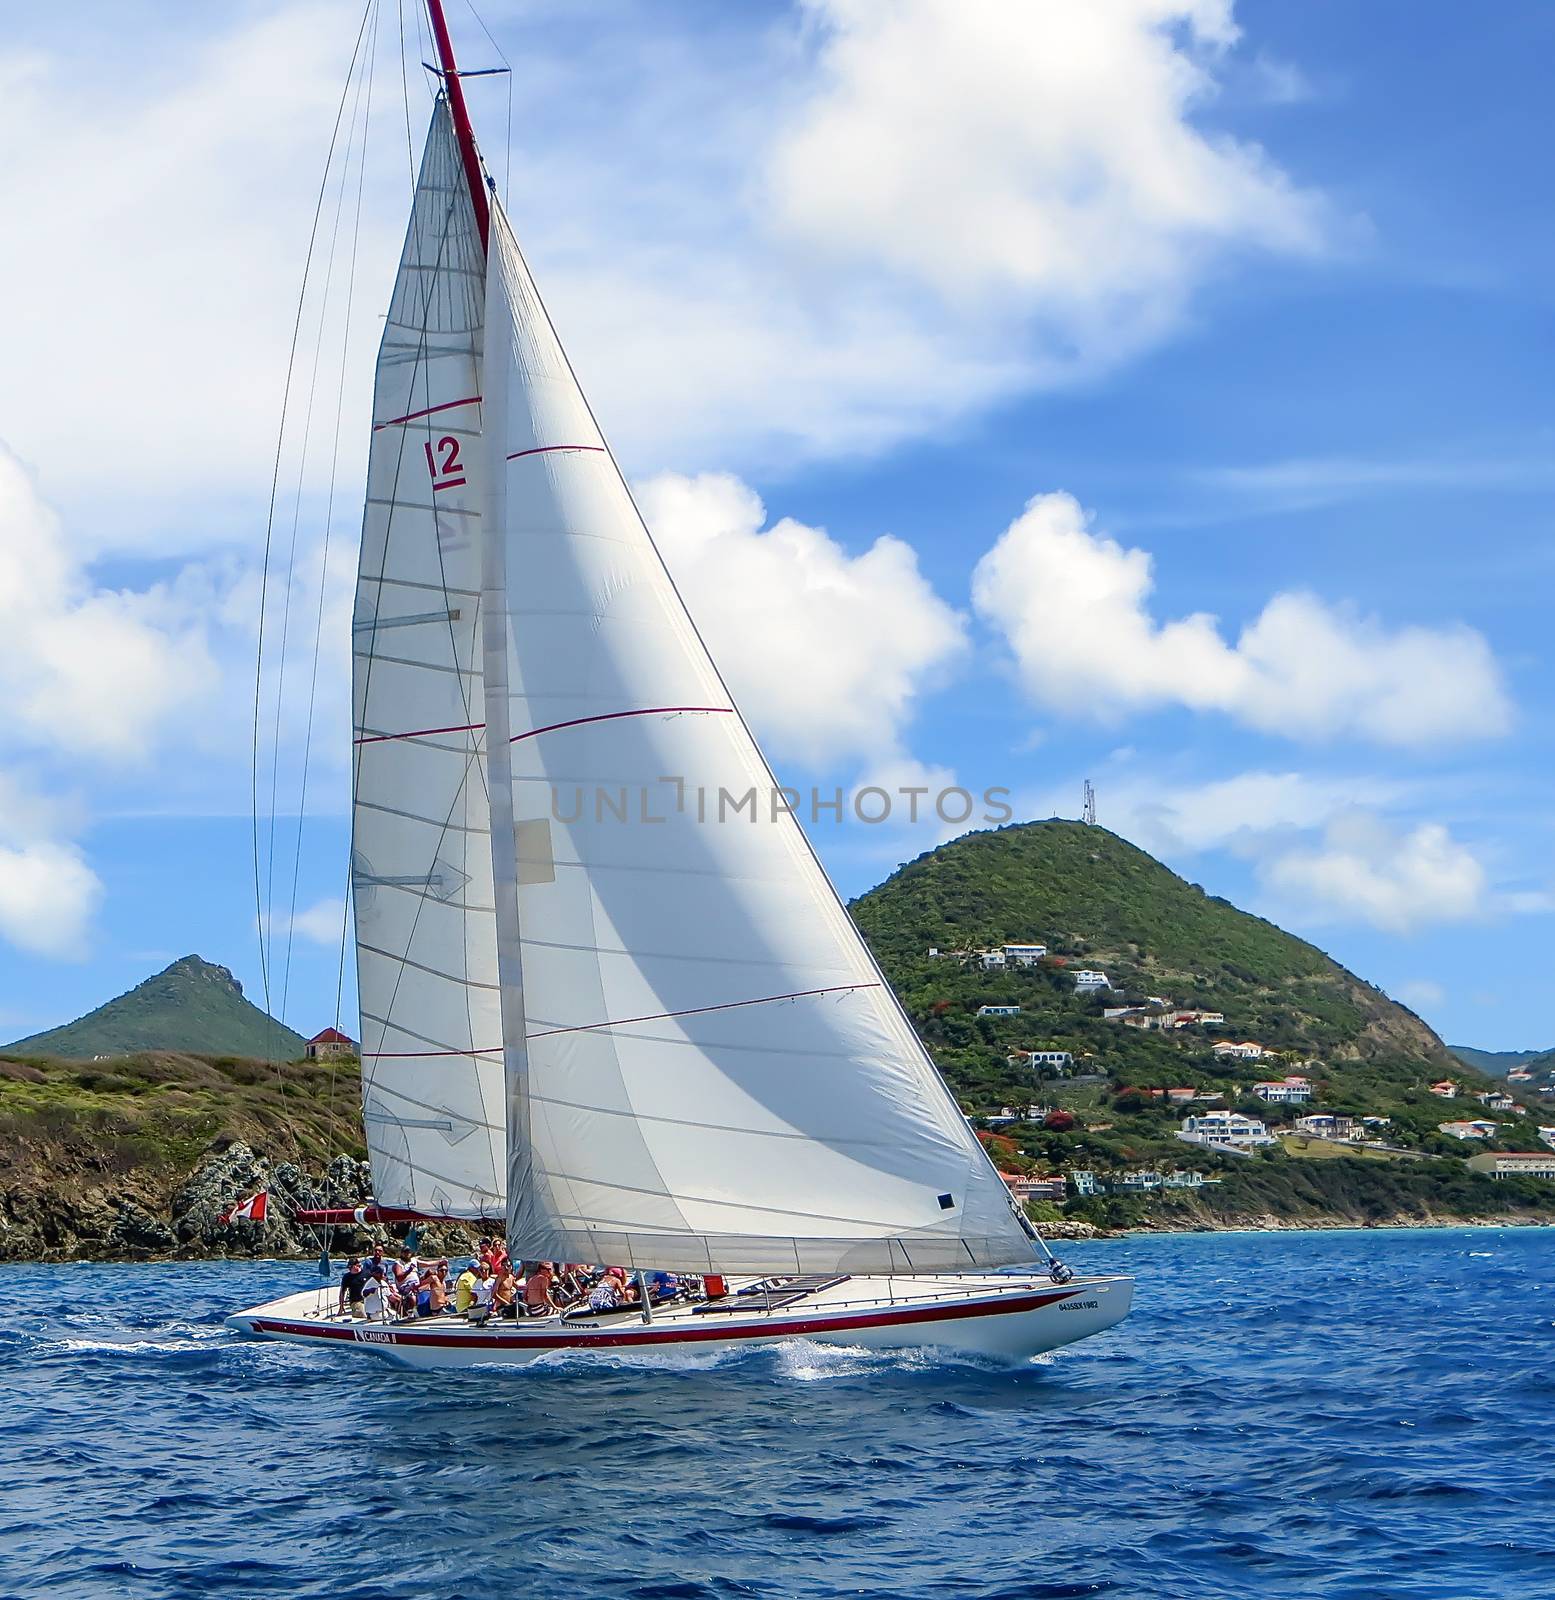 Sailing on A Fine Caribbean Day by teacherdad48@yahoo.com